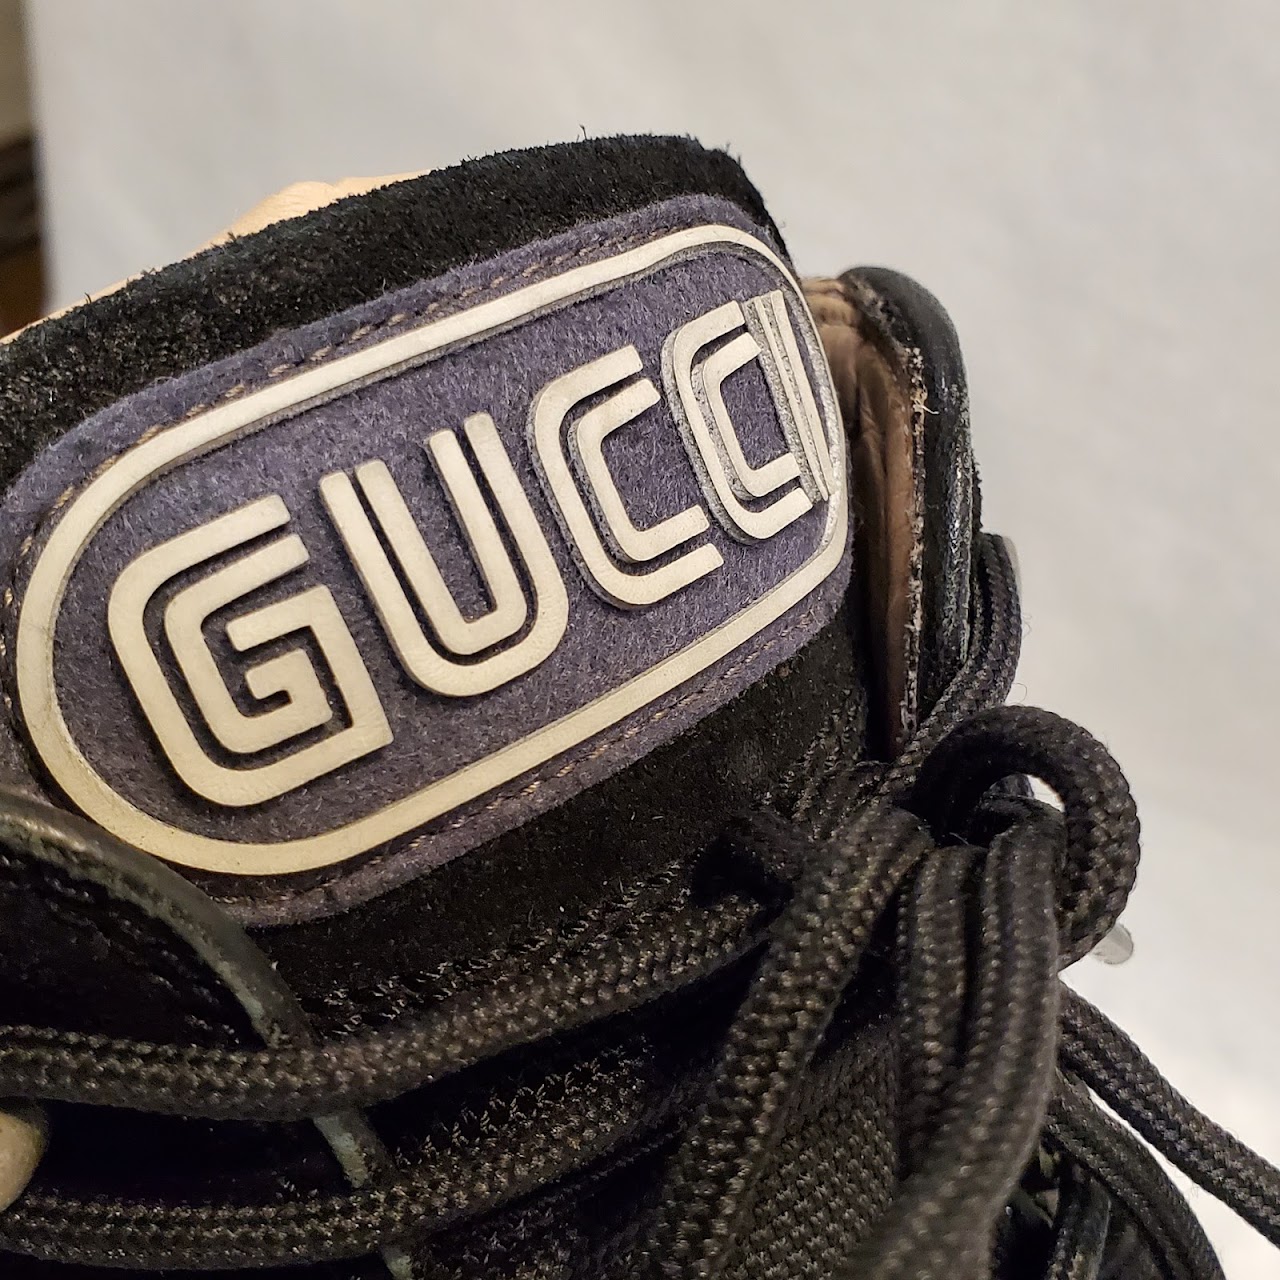 Gucci Flash Trekking Boots